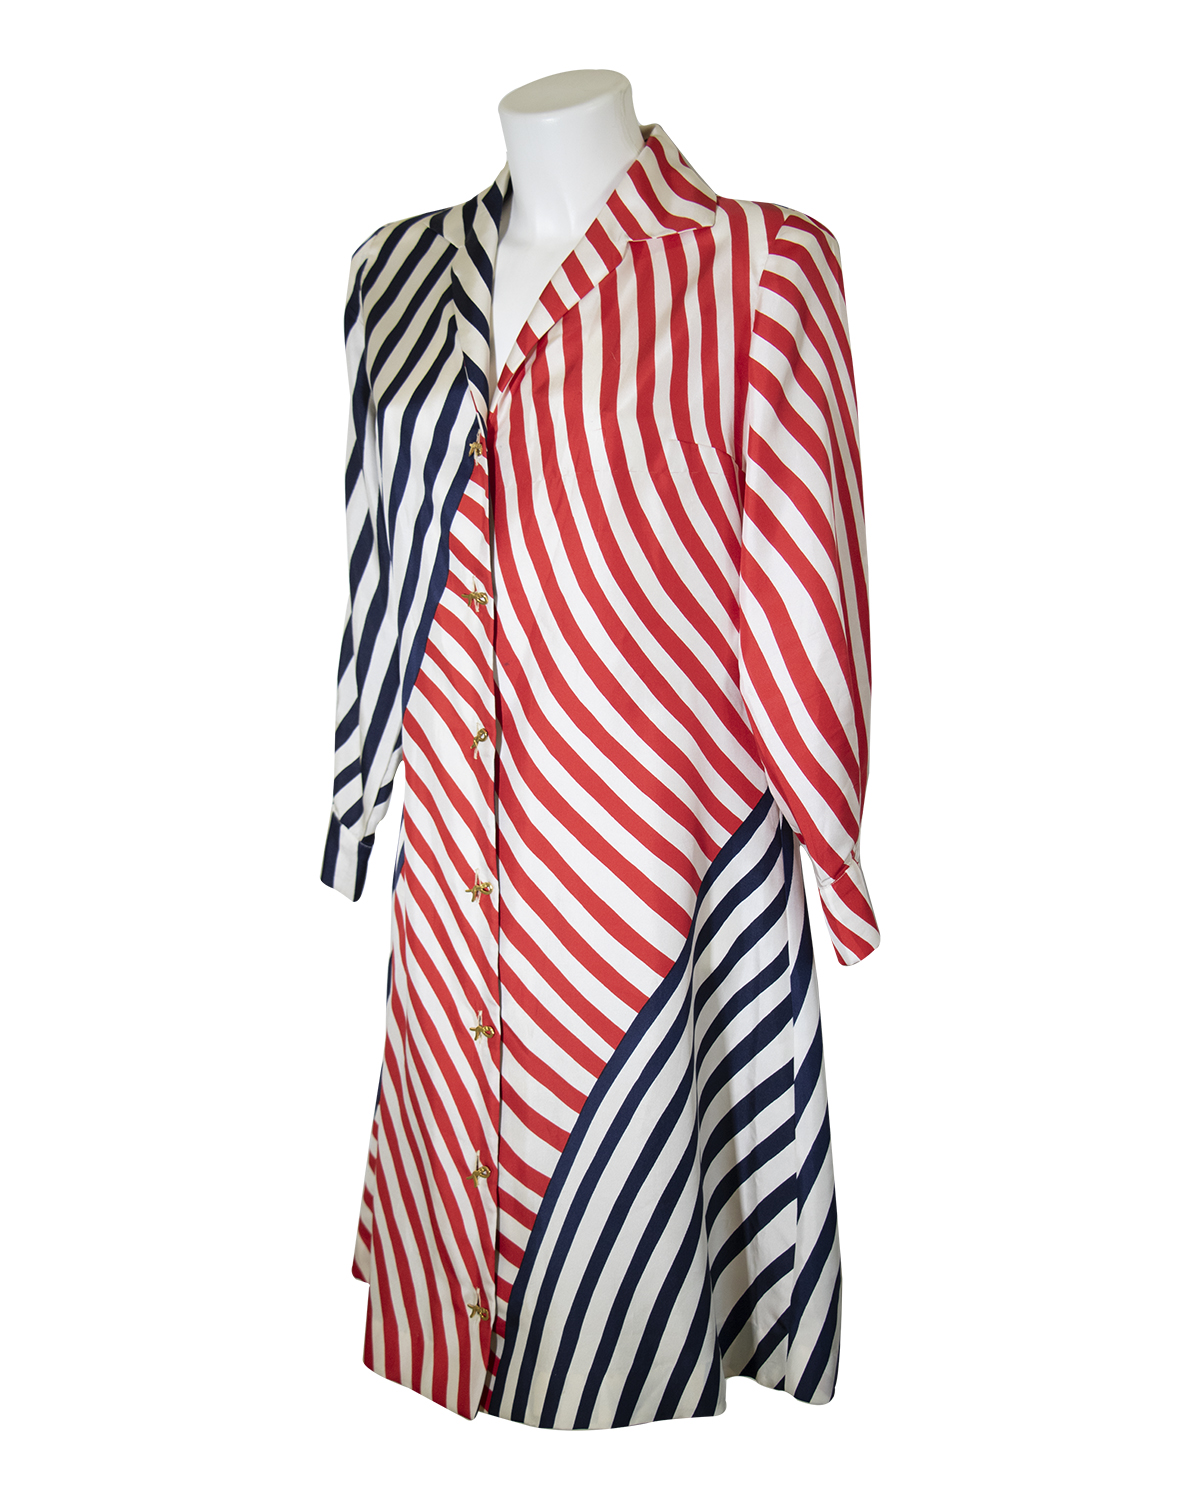 Roberta di Camerino - Dress from 1960s